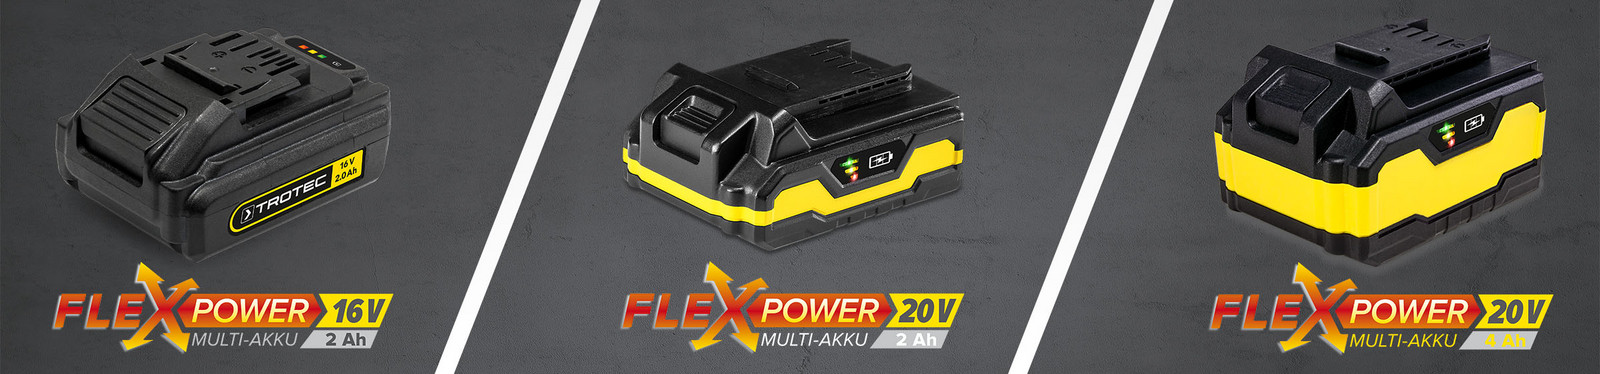 Flexpower – det innovative multibatteri-system fra Trotec